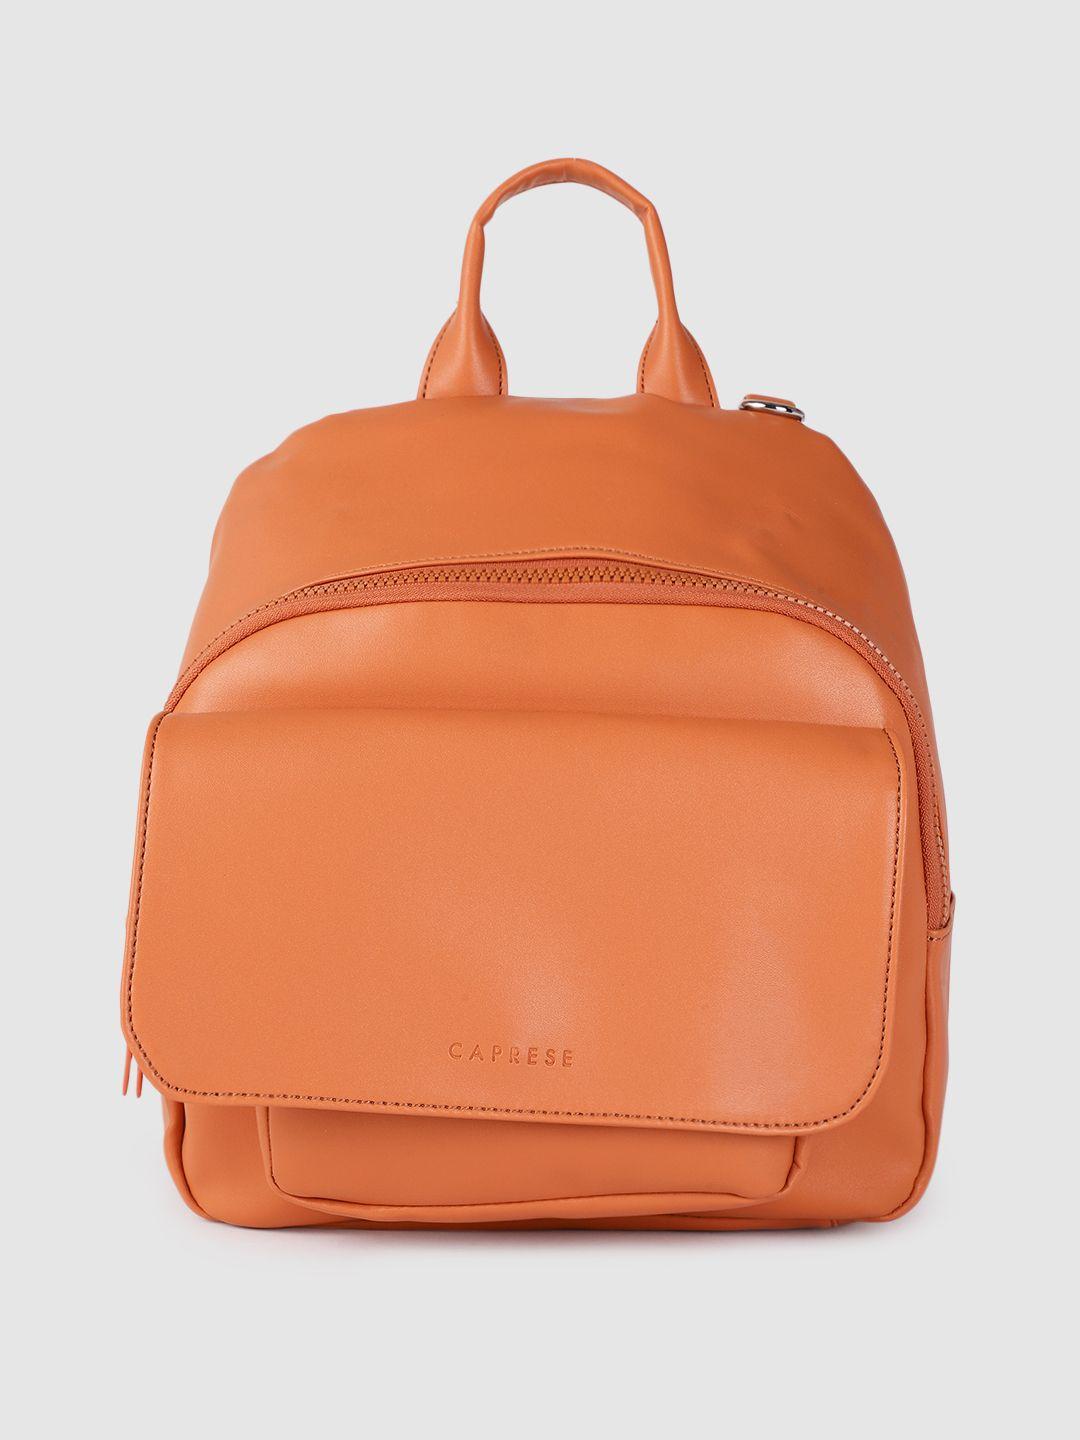 caprese women orange backpack